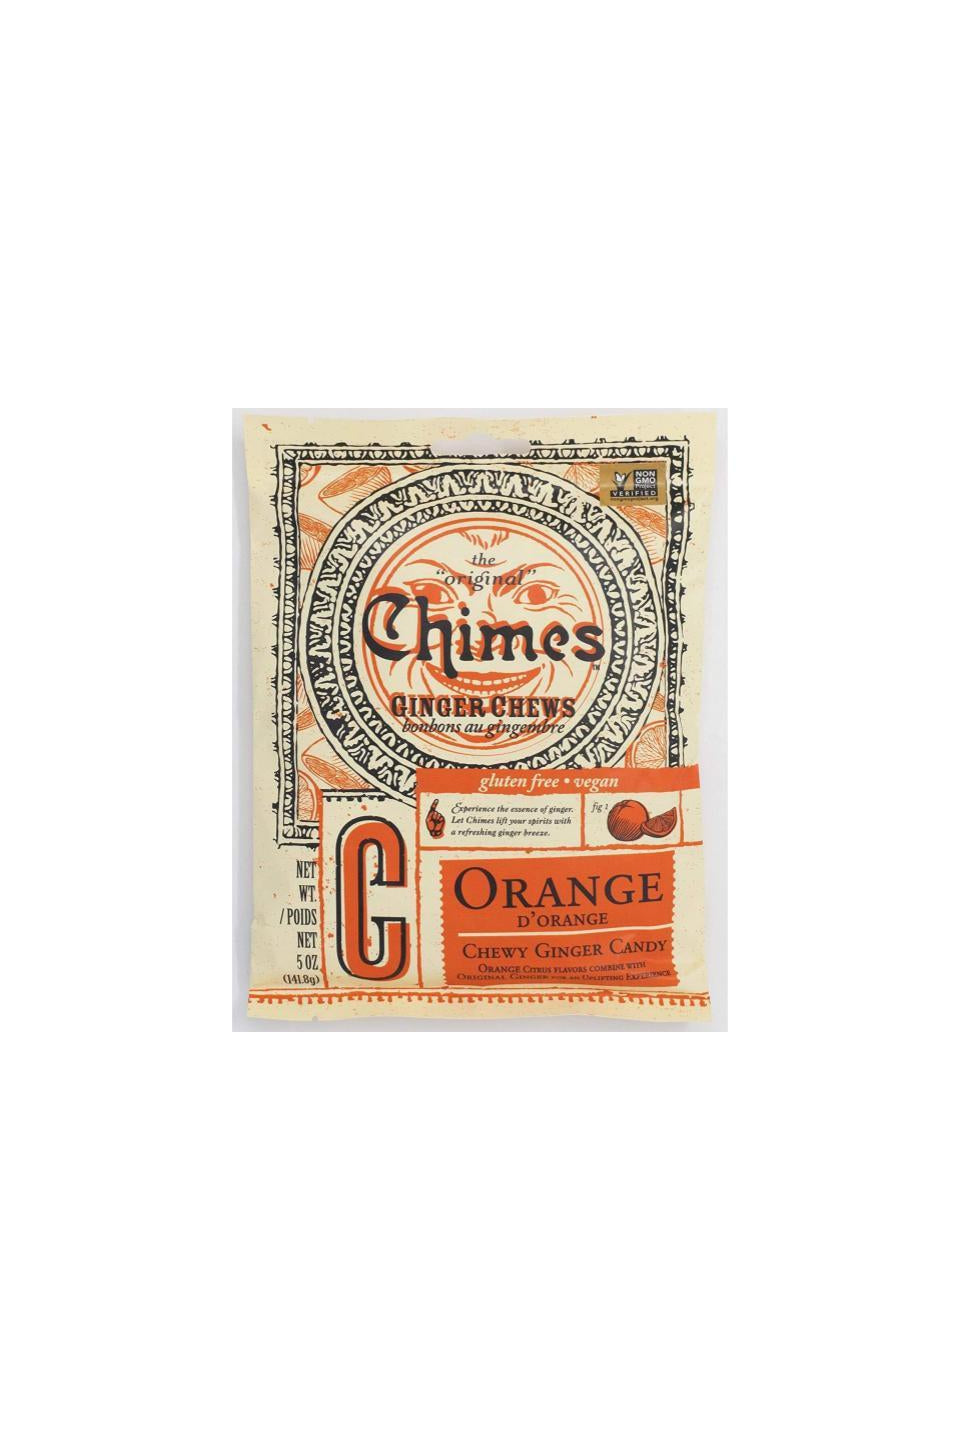 Chimes Orange Ginger Chews 141.8g